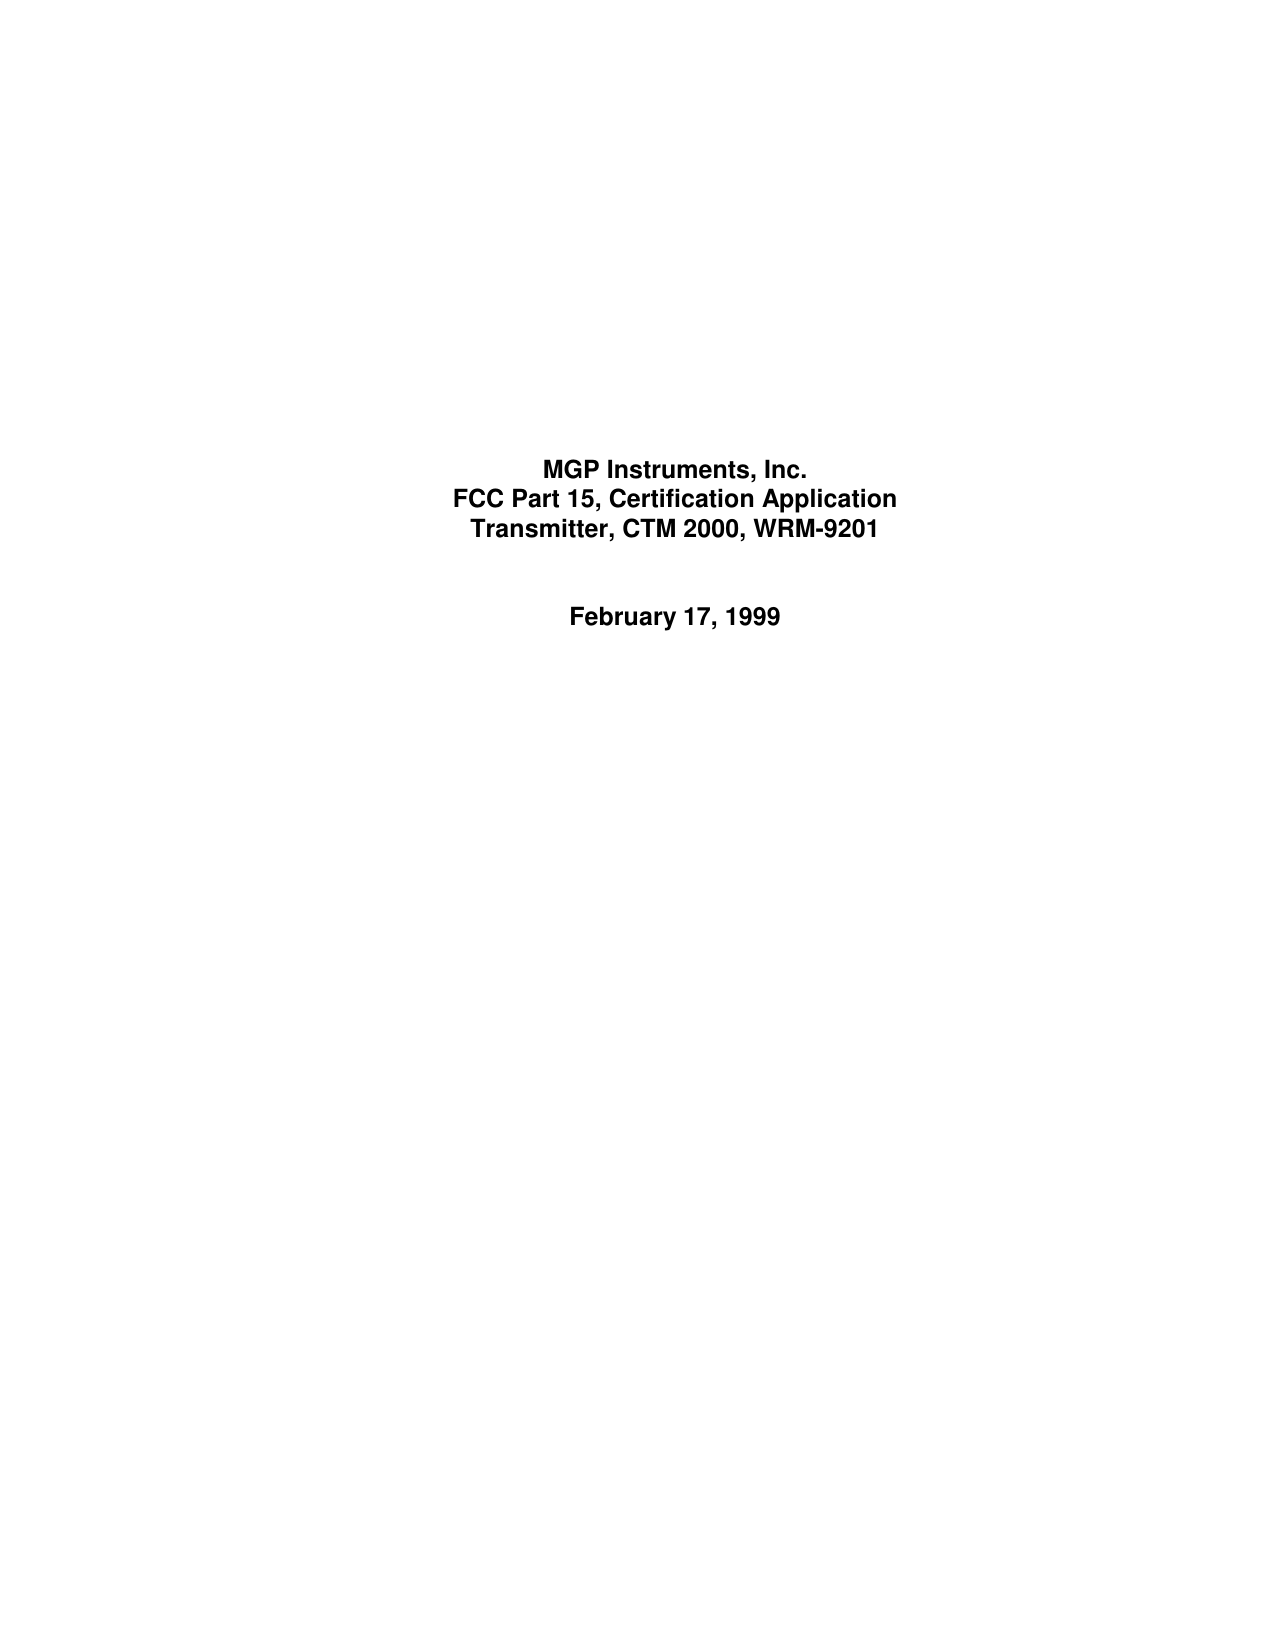                           MGP Instruments, Inc.FCC Part 15, Certification ApplicationTransmitter, CTM 2000, WRM-9201February 17, 1999